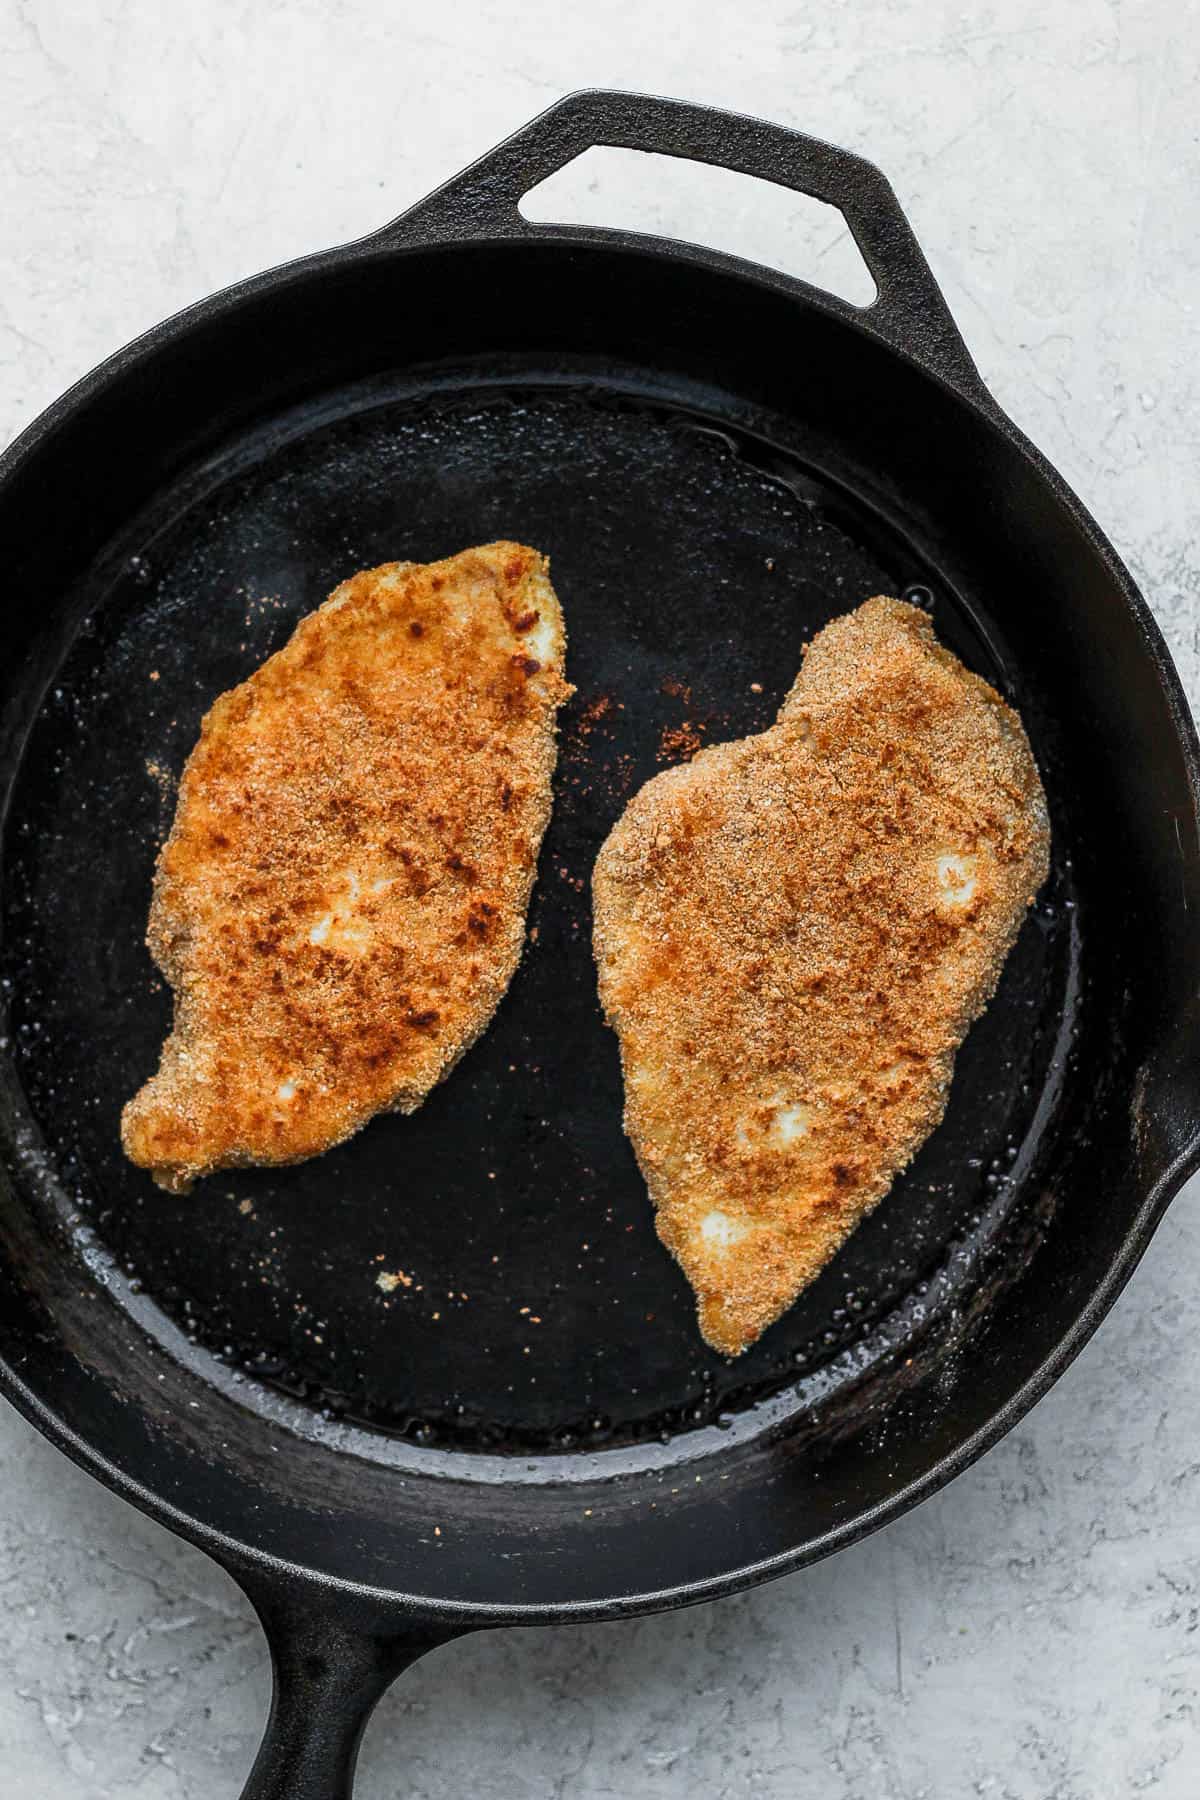 Breaded chicken on pan